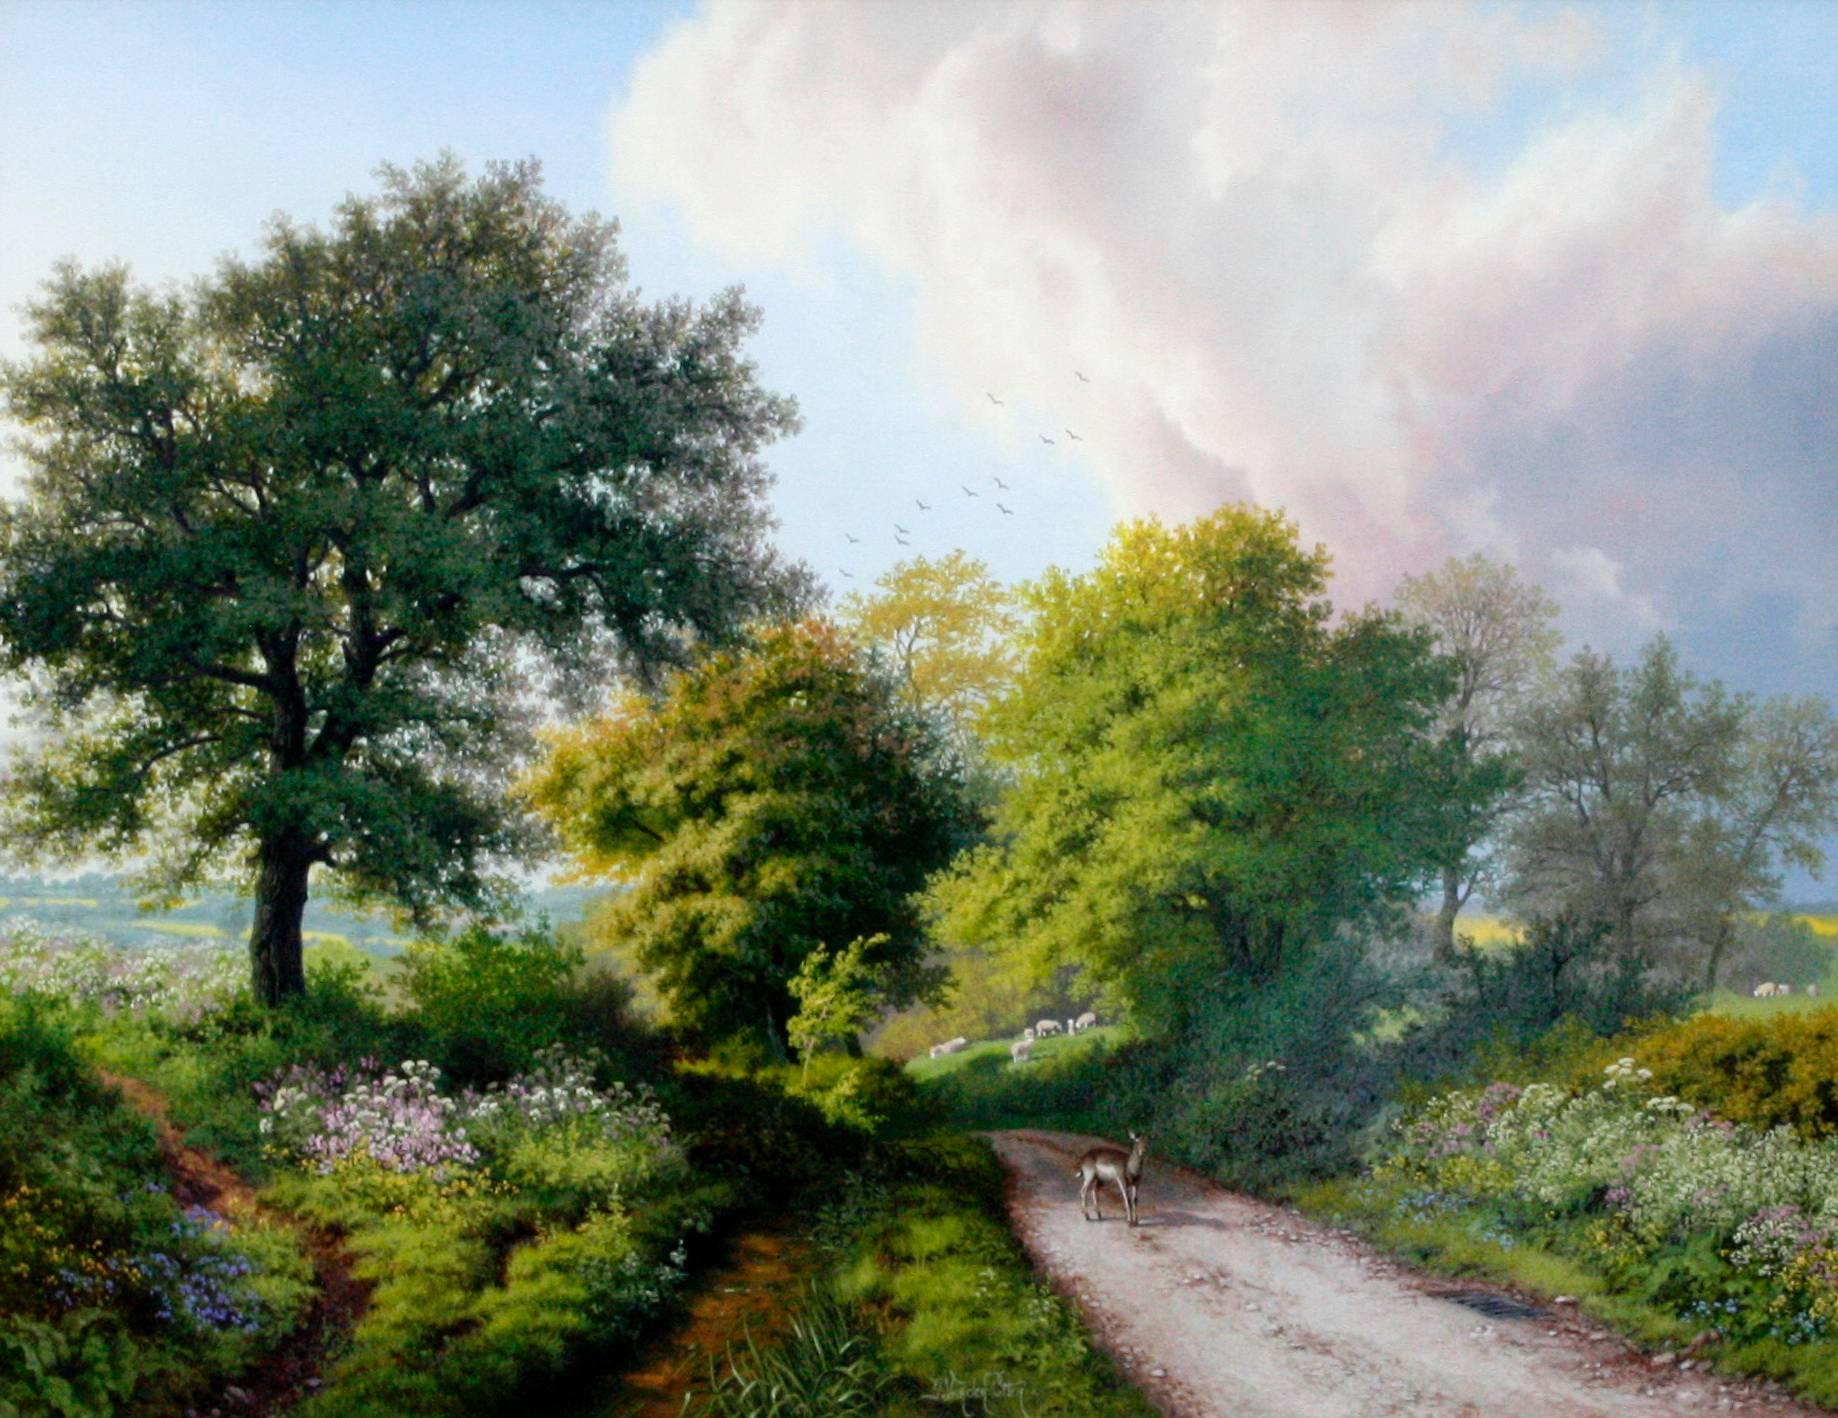 Road to Warwickshire in Spring - Painting by Daniel Van Der Putten